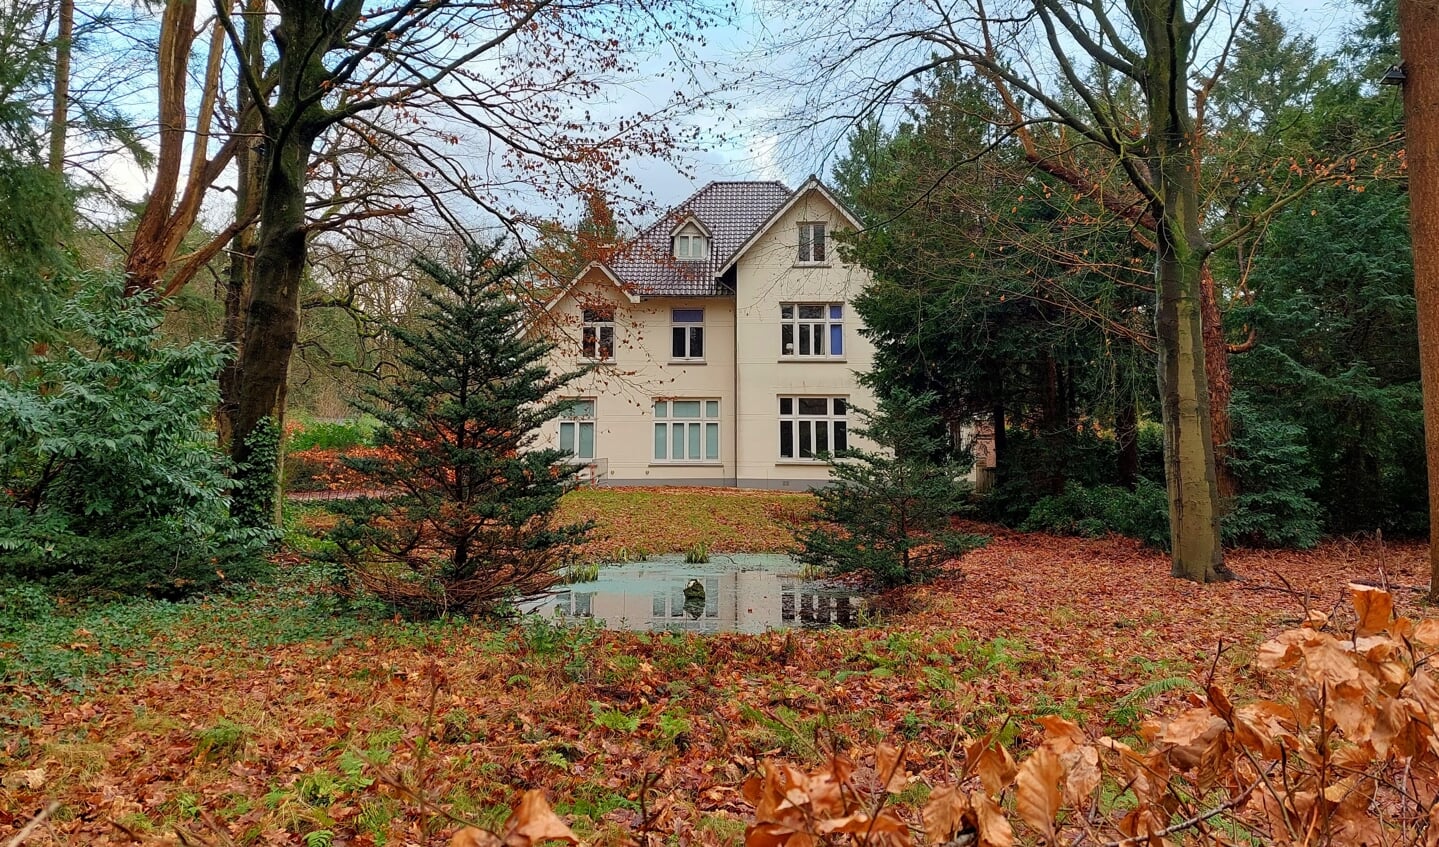 De villa aan de Biltseweg 6.